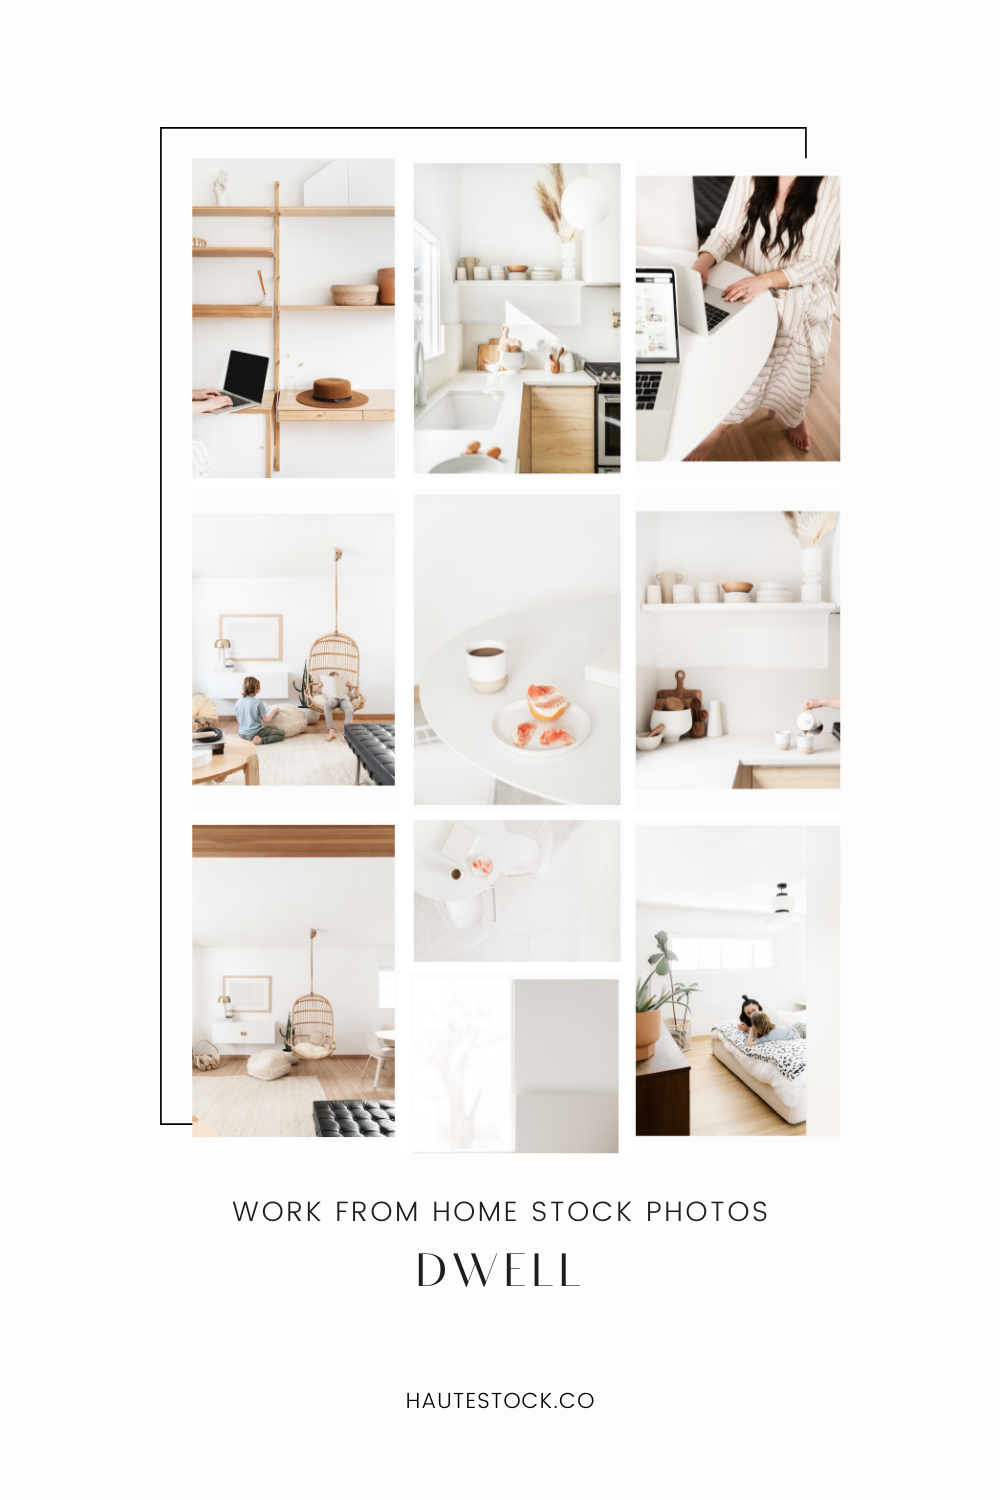 Mid century modern home office styled stock photos for women entrepreneurs